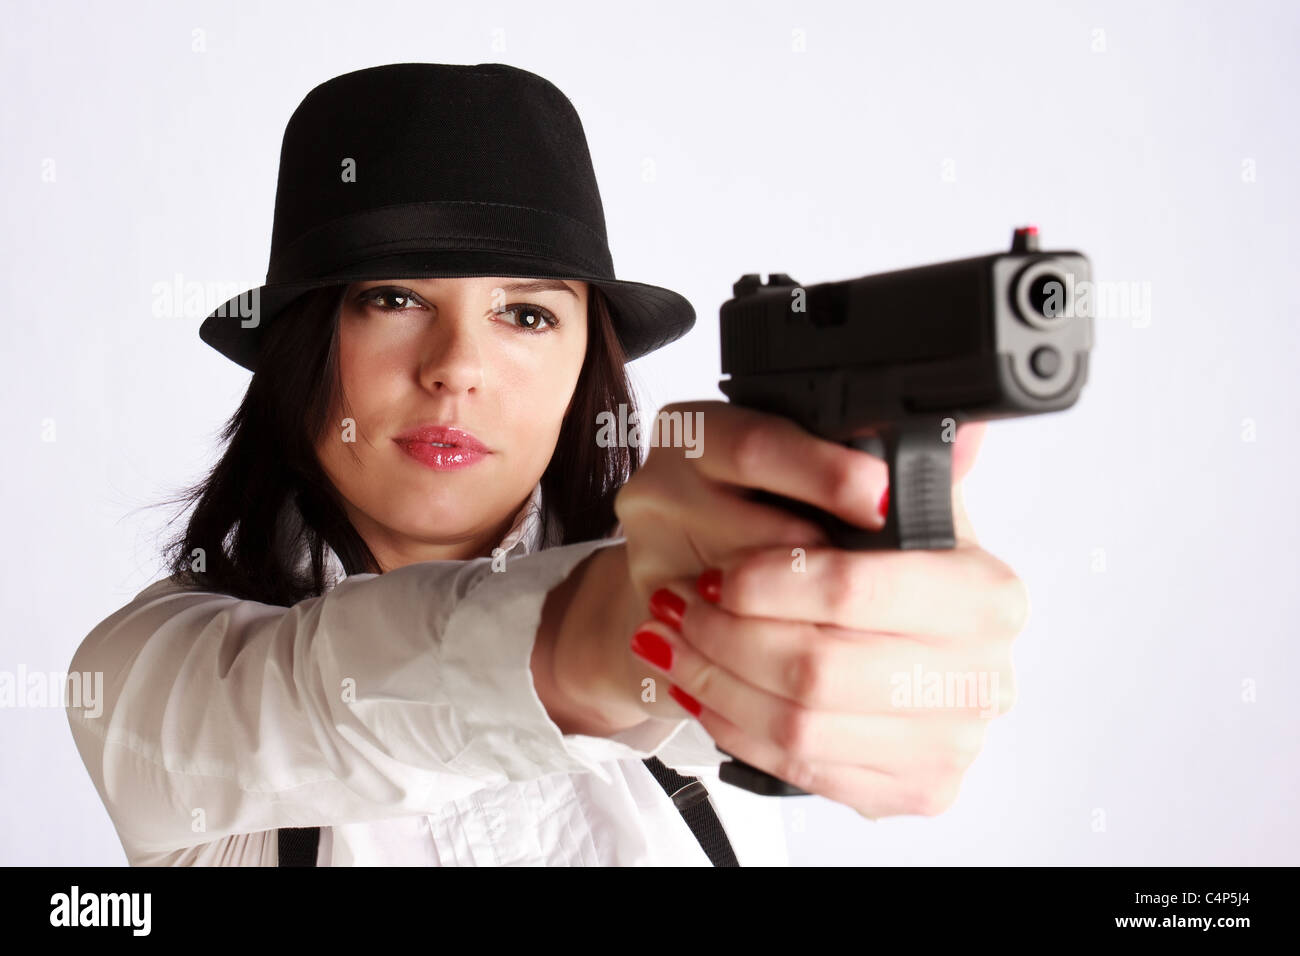 Serious woman aiming gun hi-res stock photography and images - Alamy